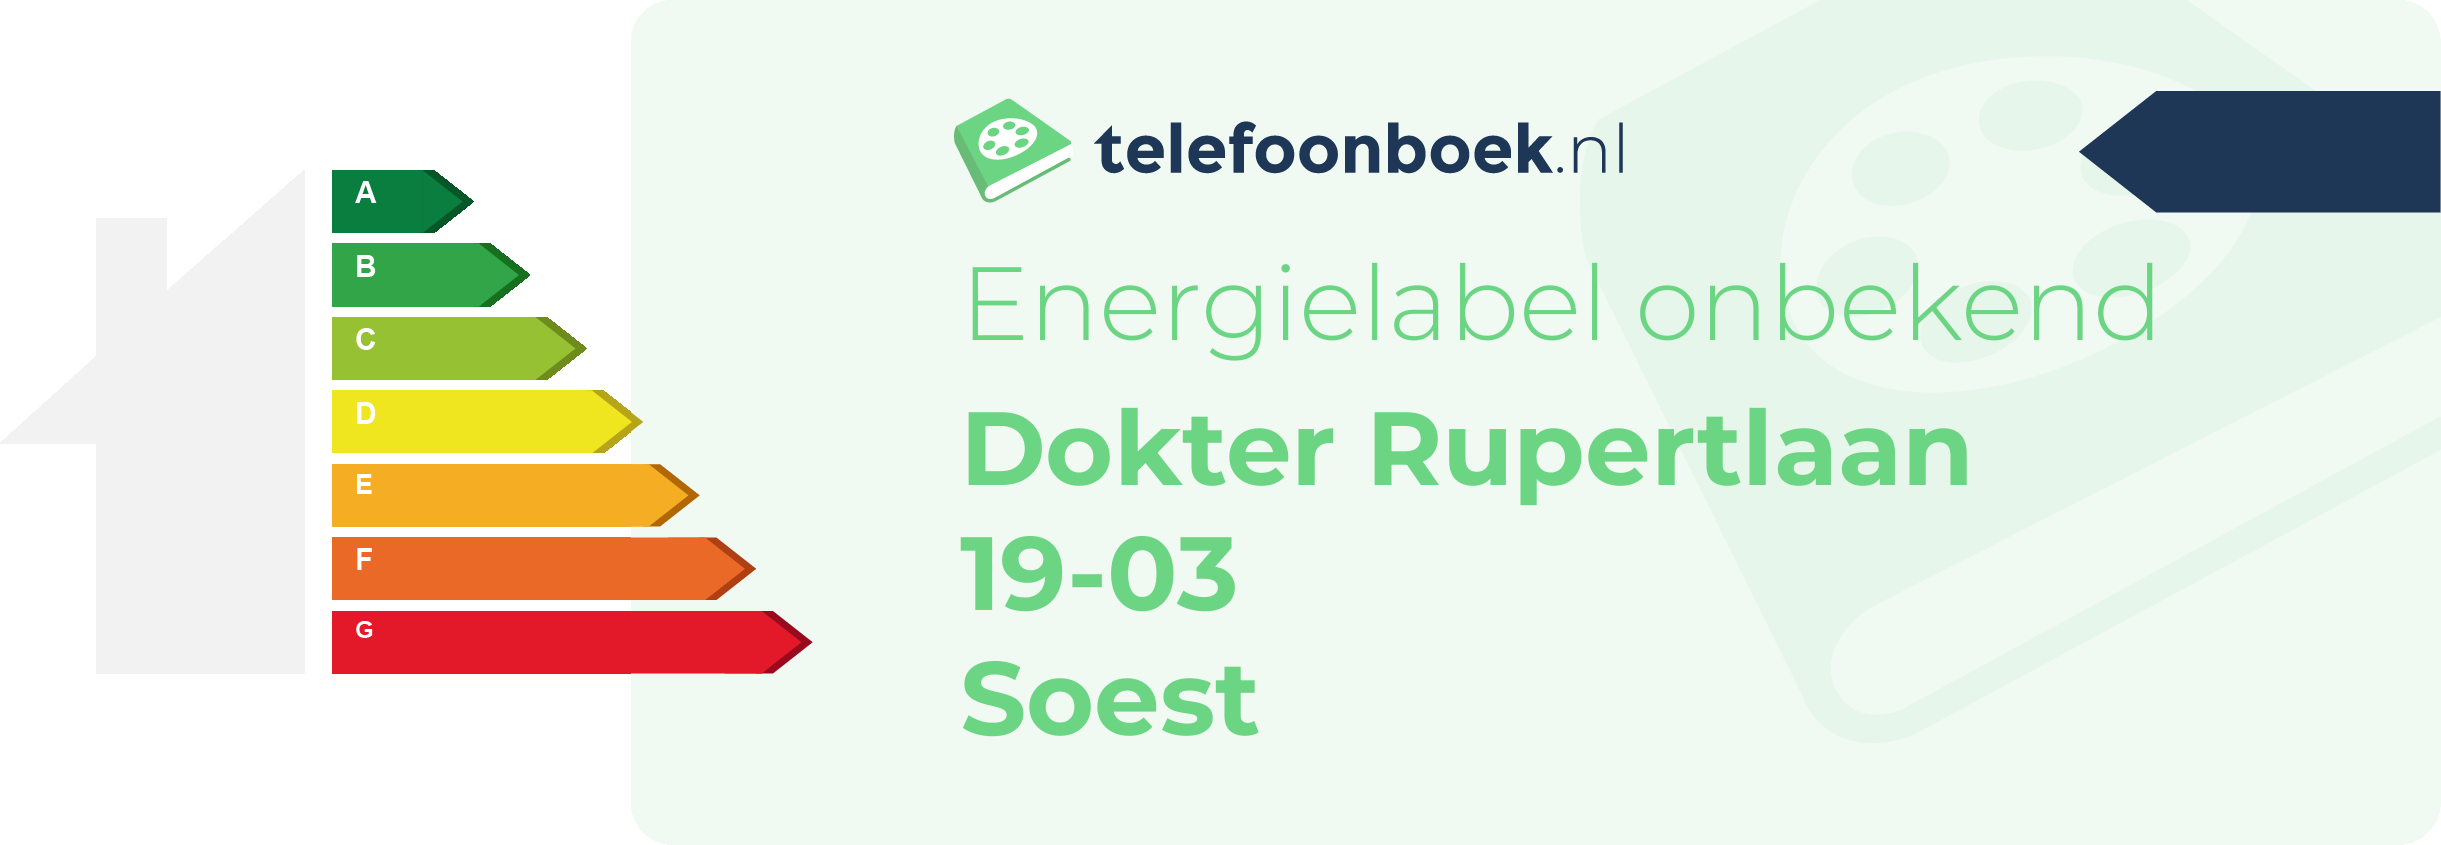 Energielabel Dokter Rupertlaan 19-03 Soest